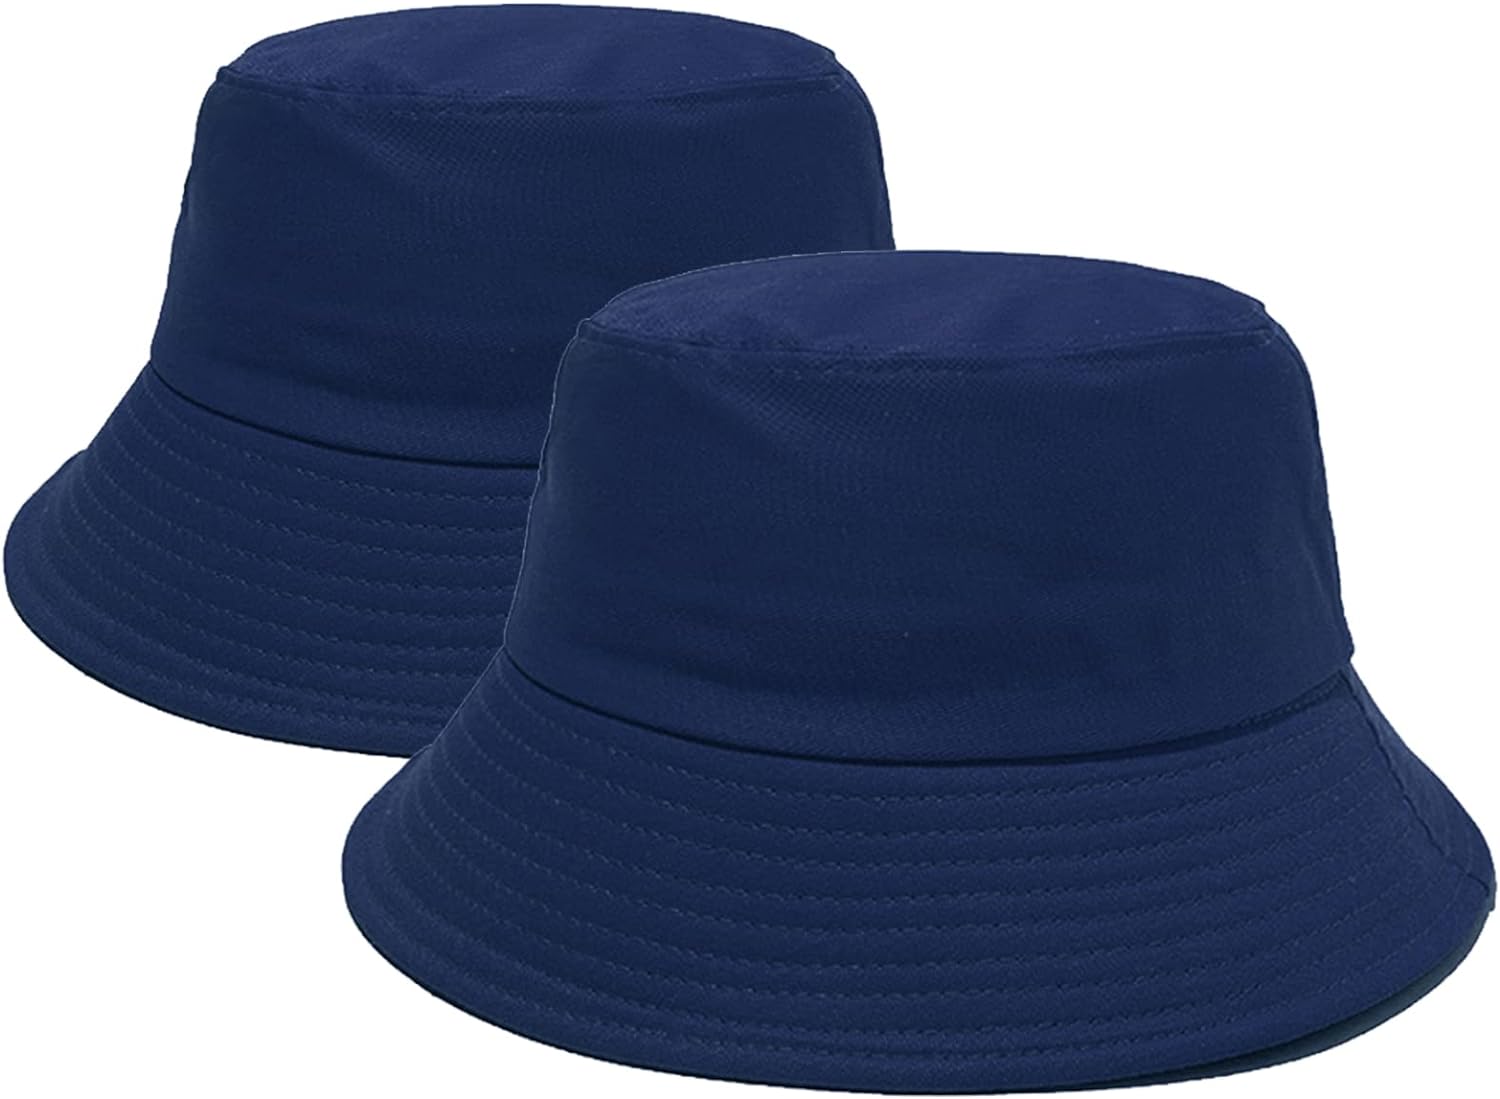 PFFY Bucket Hat for Women Men Cotton Summer Sun Beach Fishing Cap - PFFY Bucket Hat Review